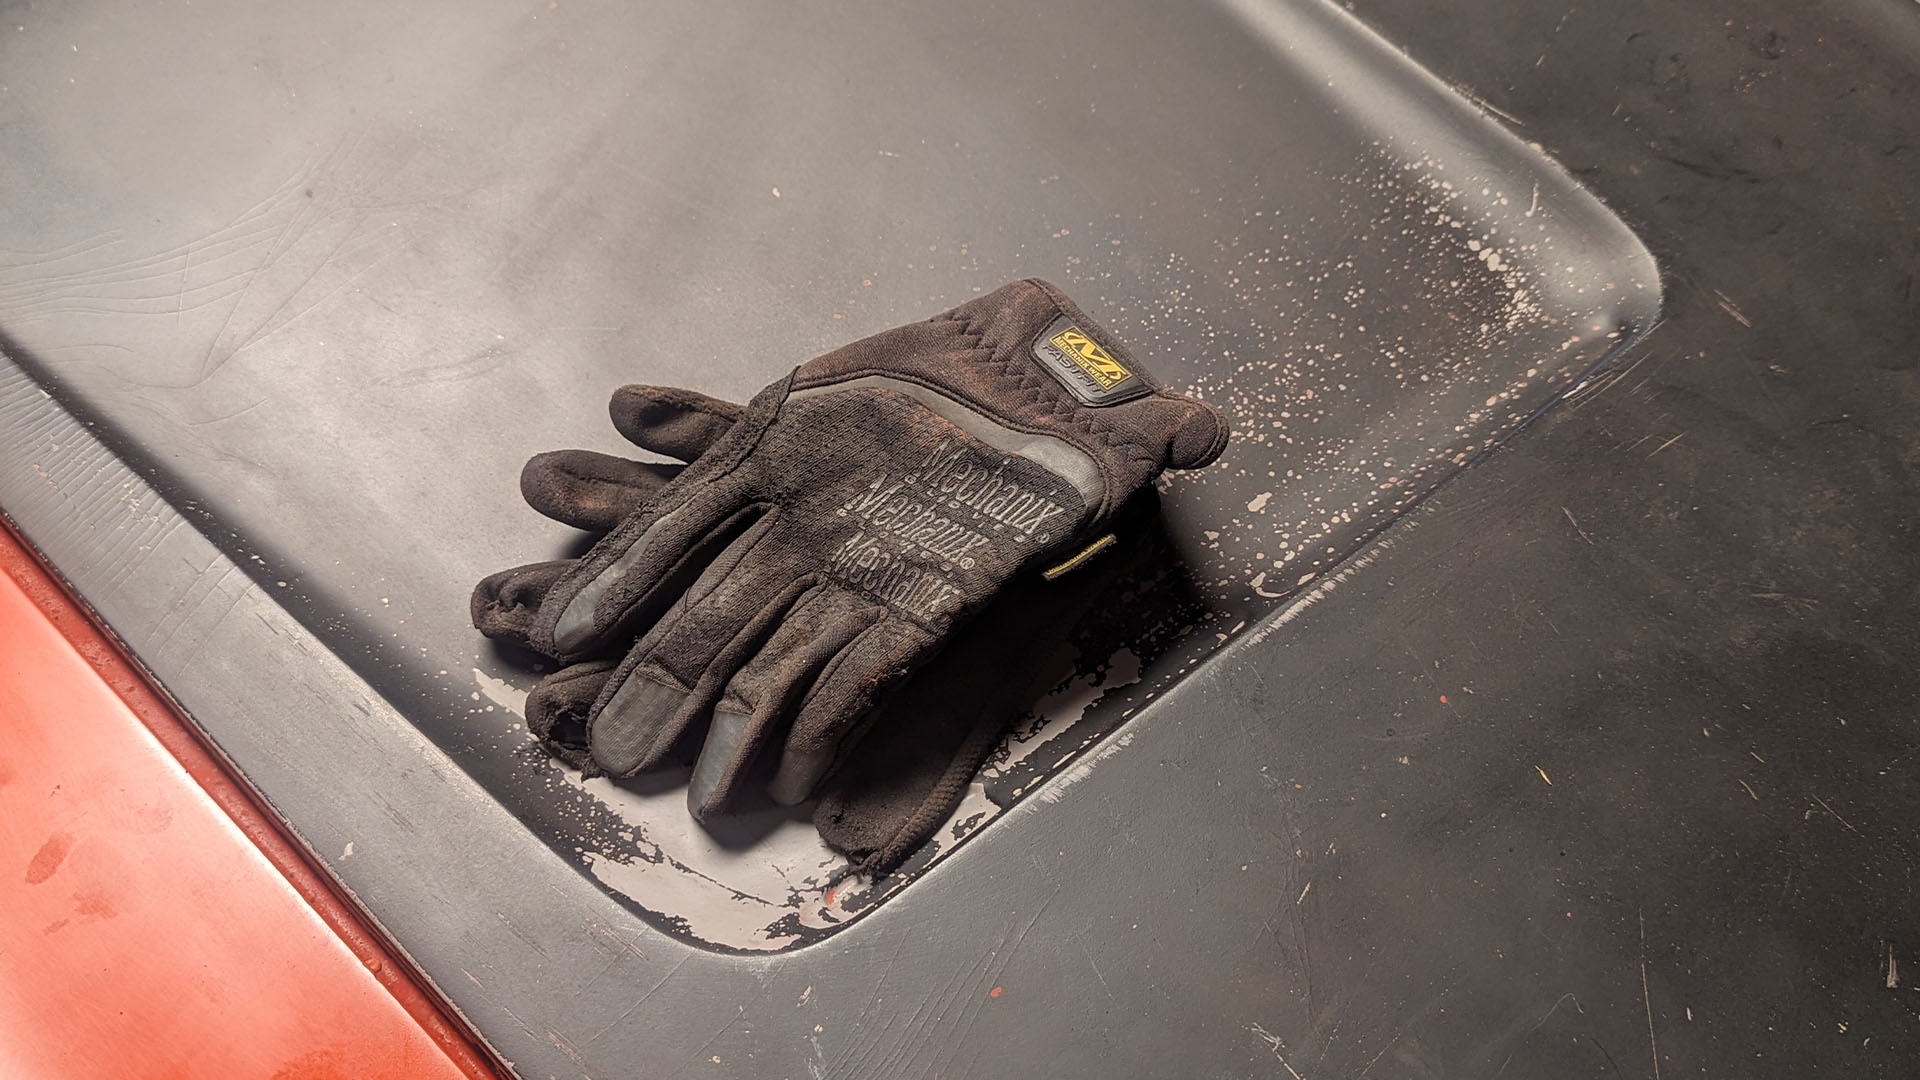 Mechanix Wear - Which Glove Works Best for Your Job? 